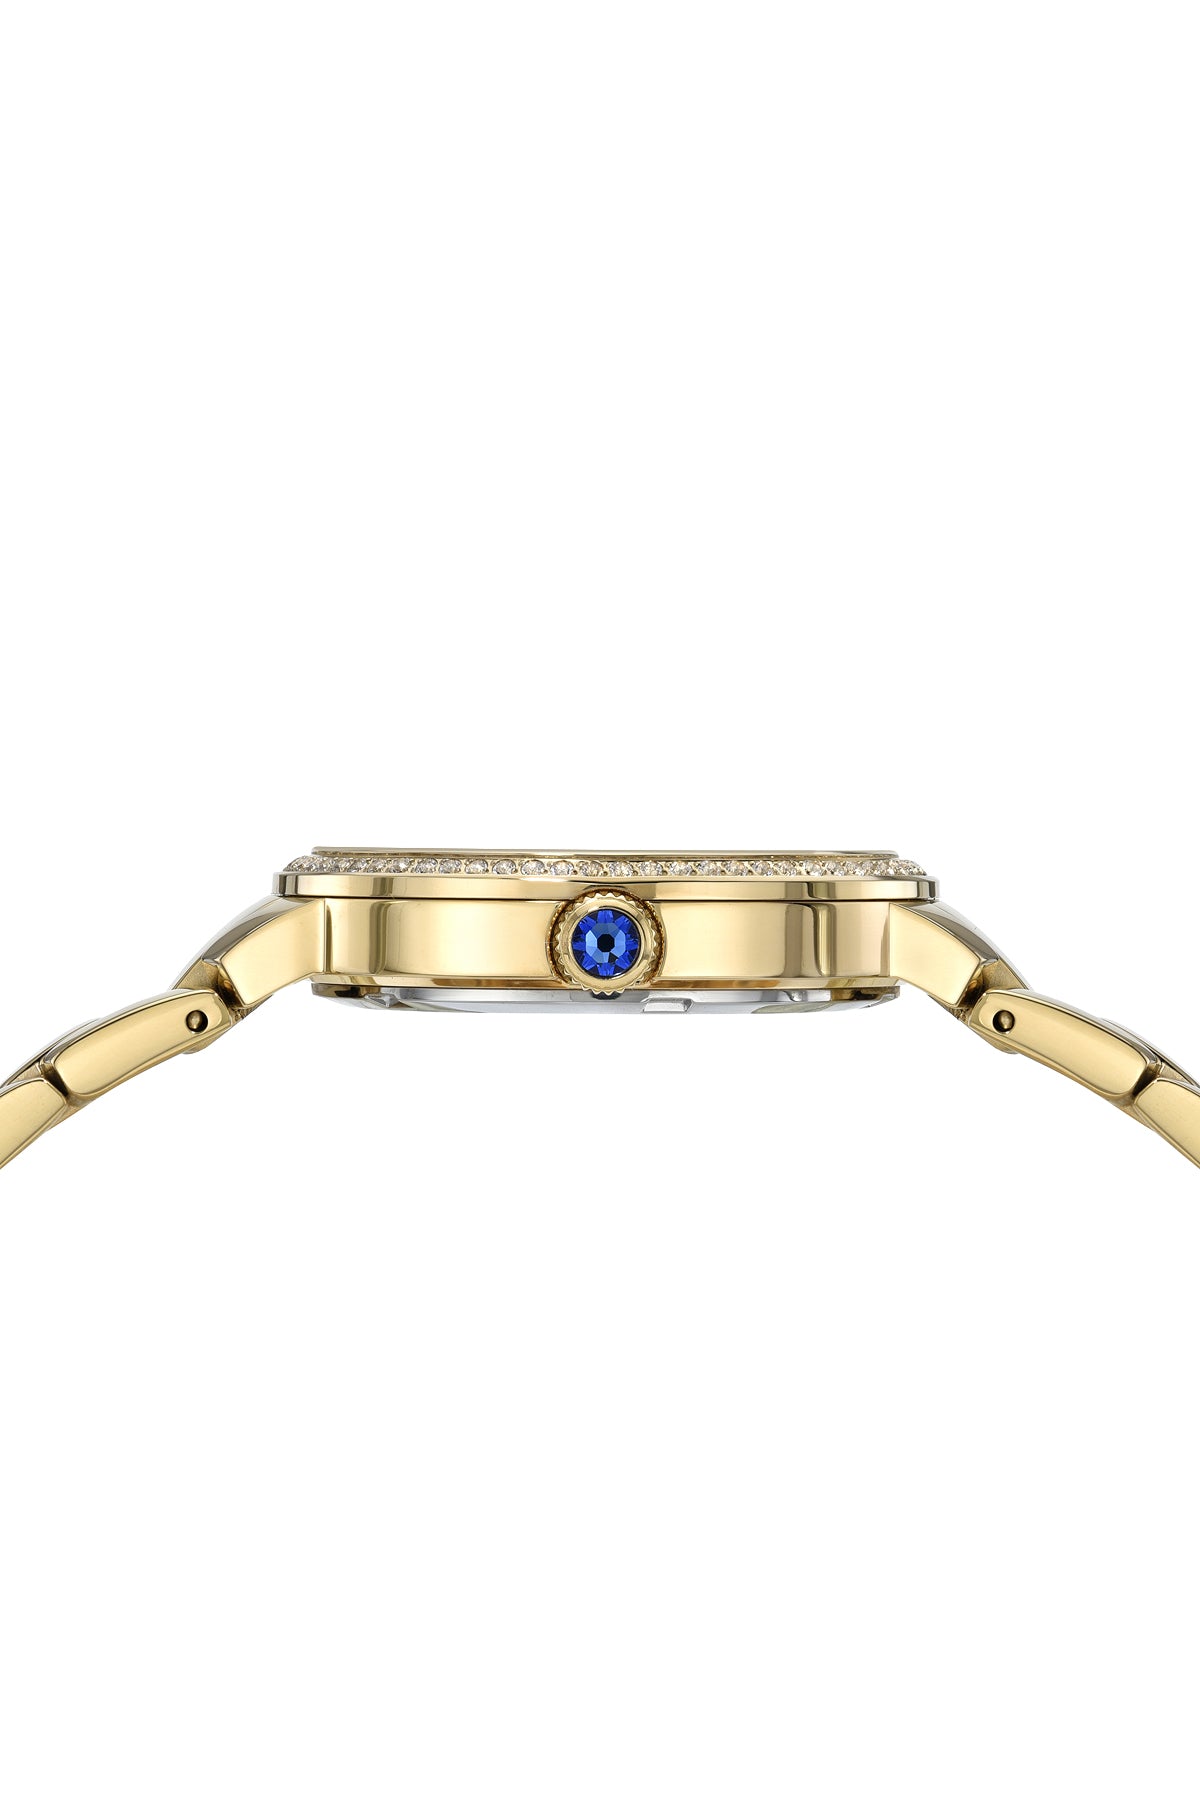 Porsamo Bleu Luna Luxury Topaz Women's Stainless Steel Watch, Gold, White With Flinque Guilloche Dial 1181BLUS